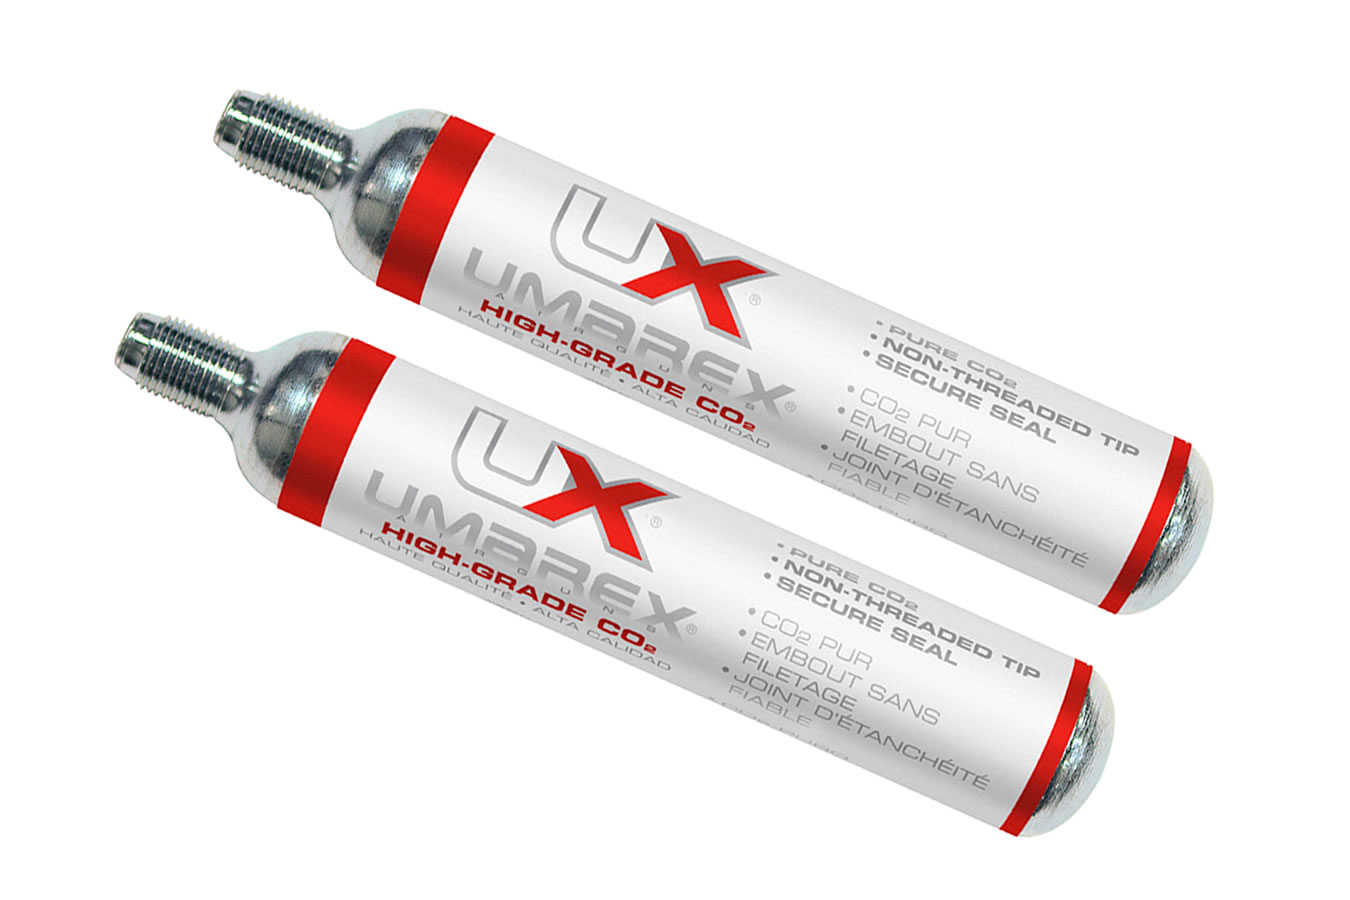 Umarex Usa 88g CO2 Cartridges - 2 pack | Sportsman's Outdoor Superstore